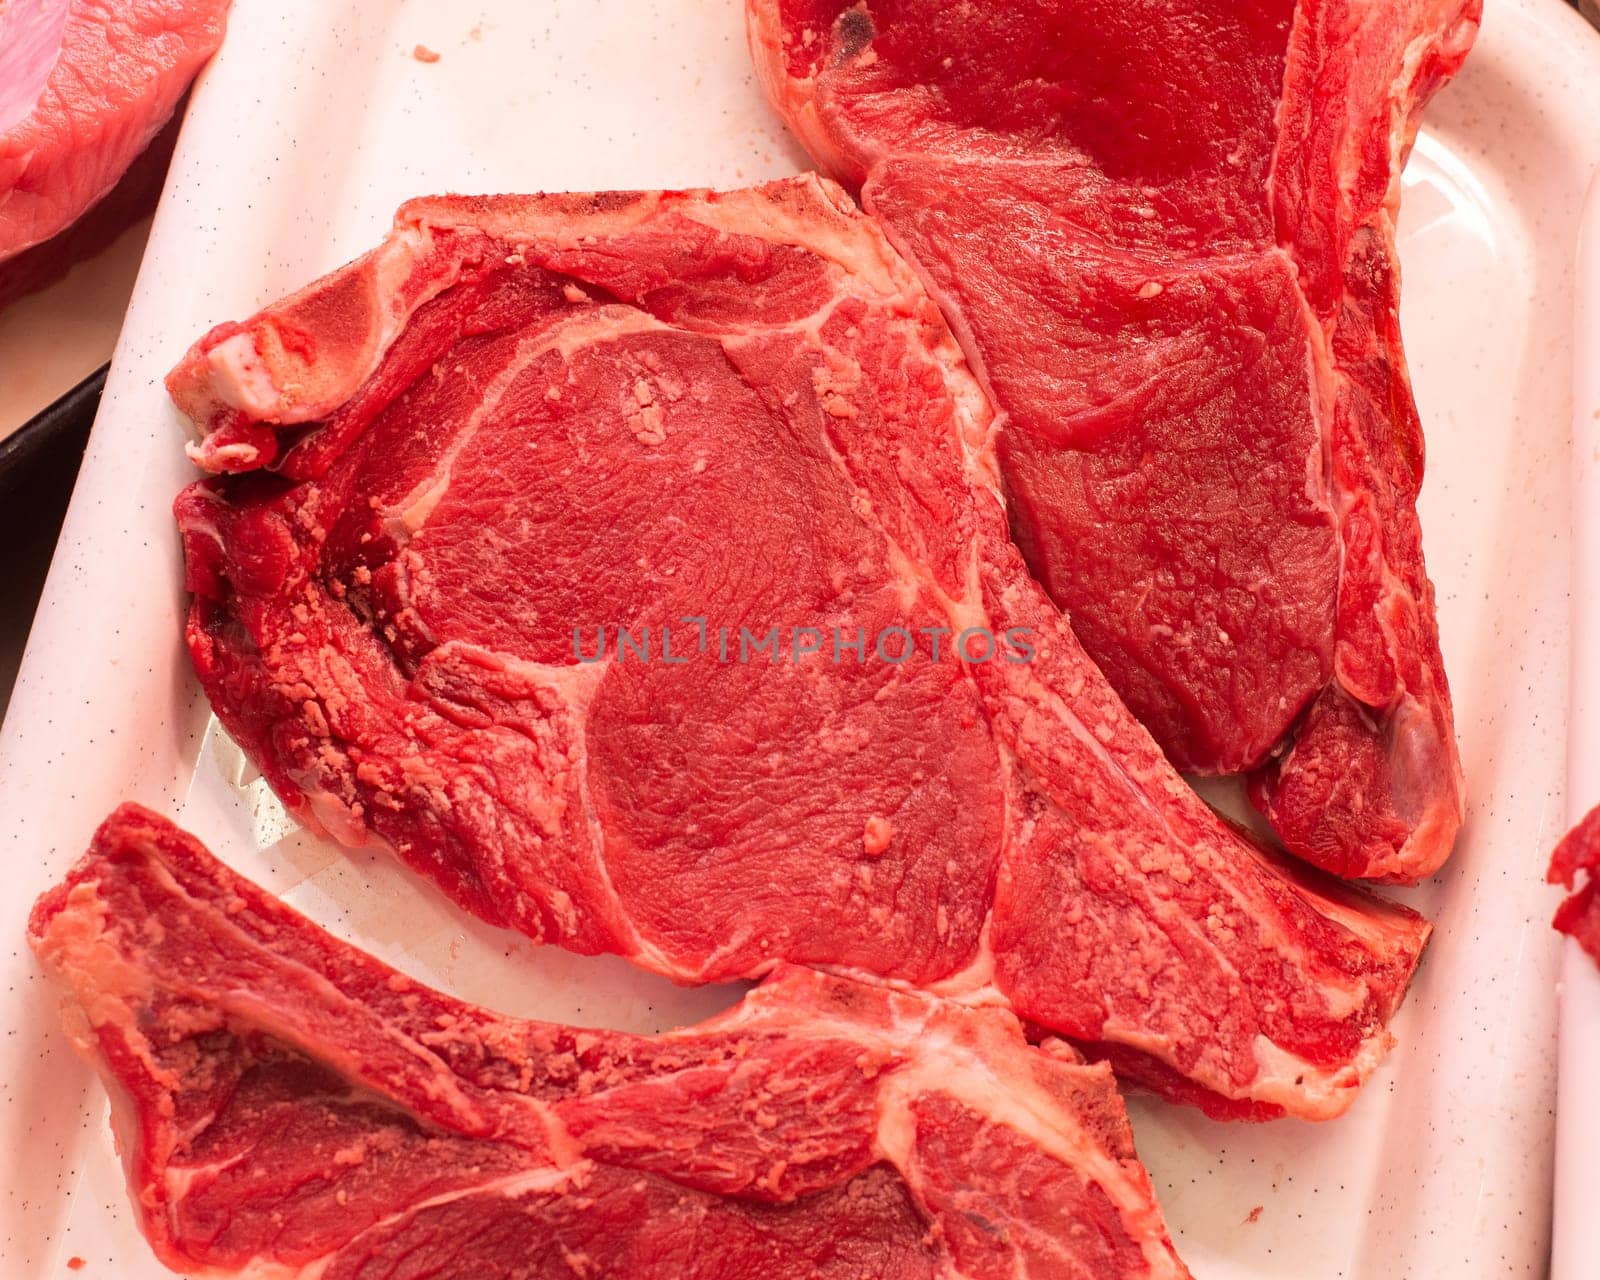 Raw beef steak in market. High quality photo